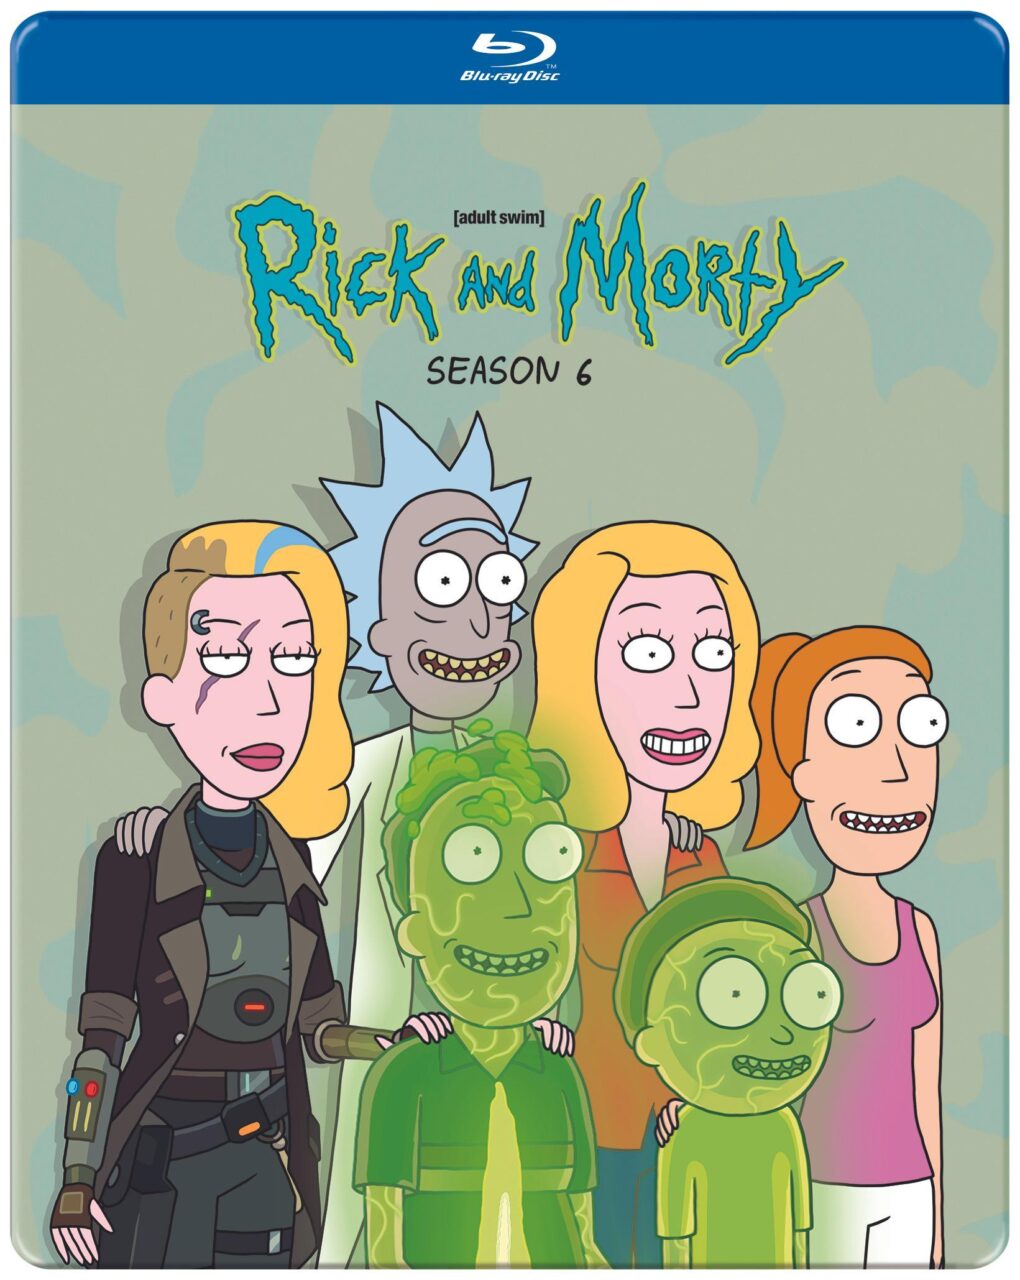 Rick And Morty: Season 6 Blu-Ray Steelbook cover (Warner Bros. Home Entertainment)